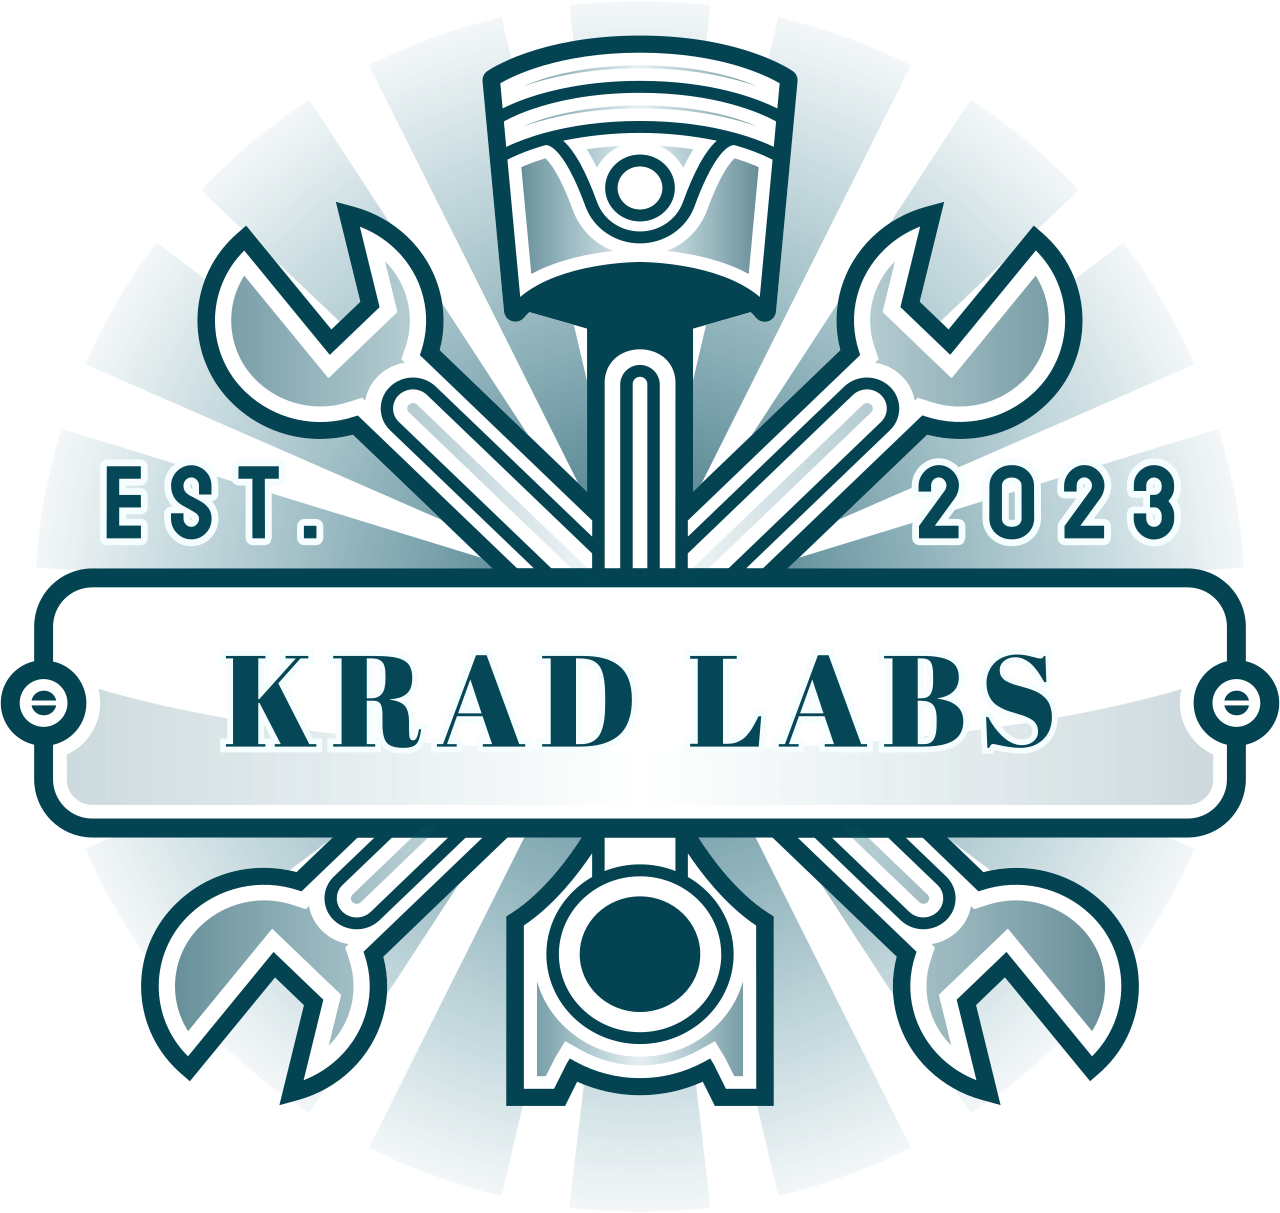 KRAD LABS's logo